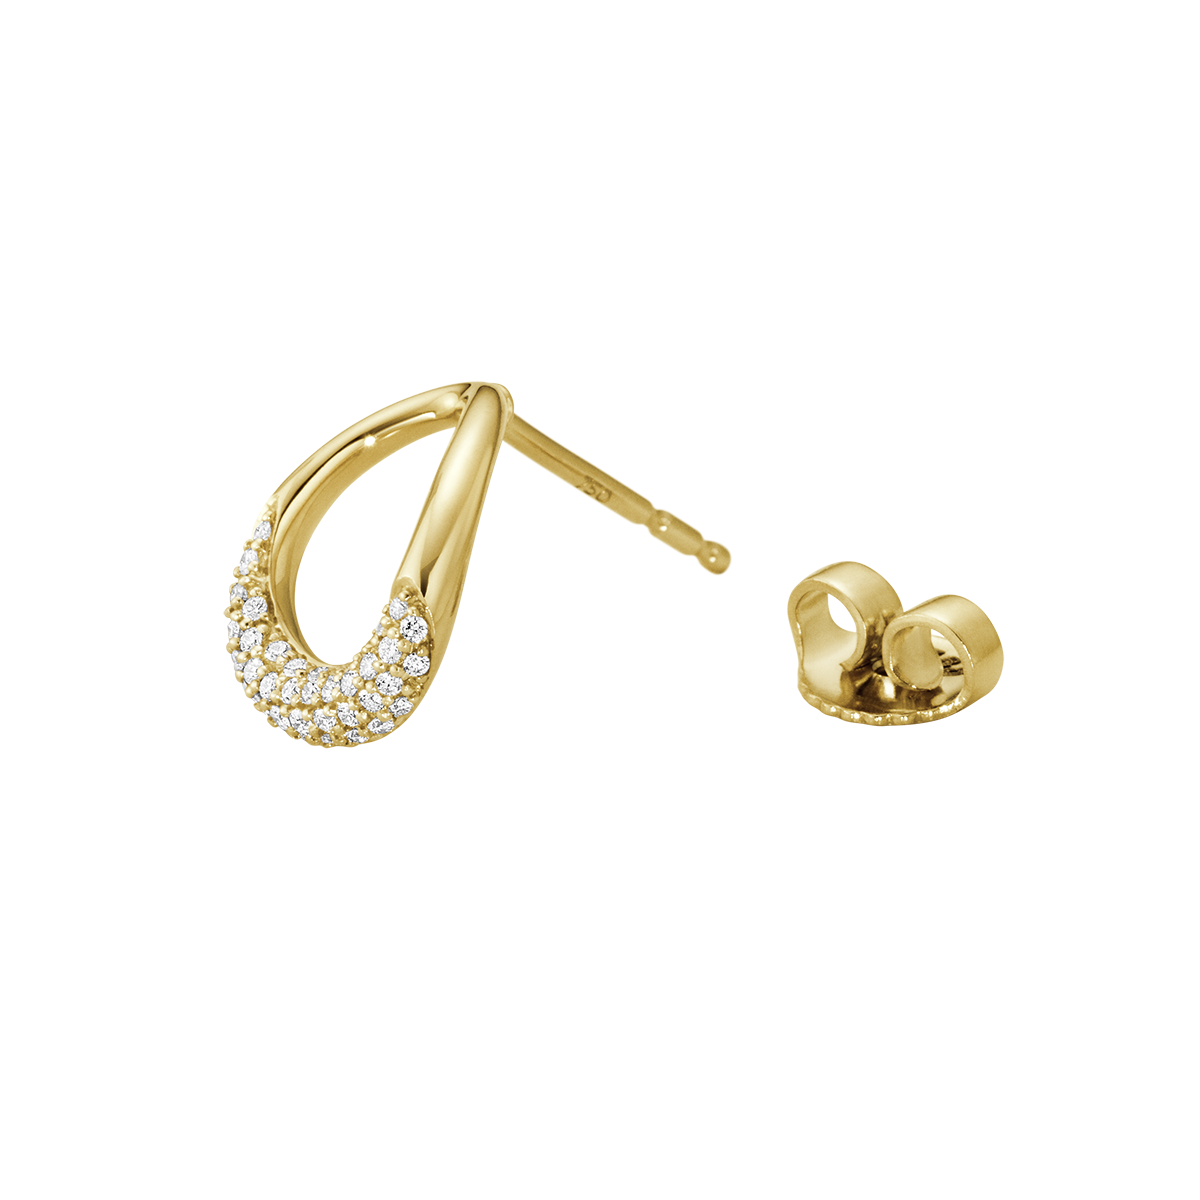 Offspring øreringe med diamanter - guld fra Georg Jensen